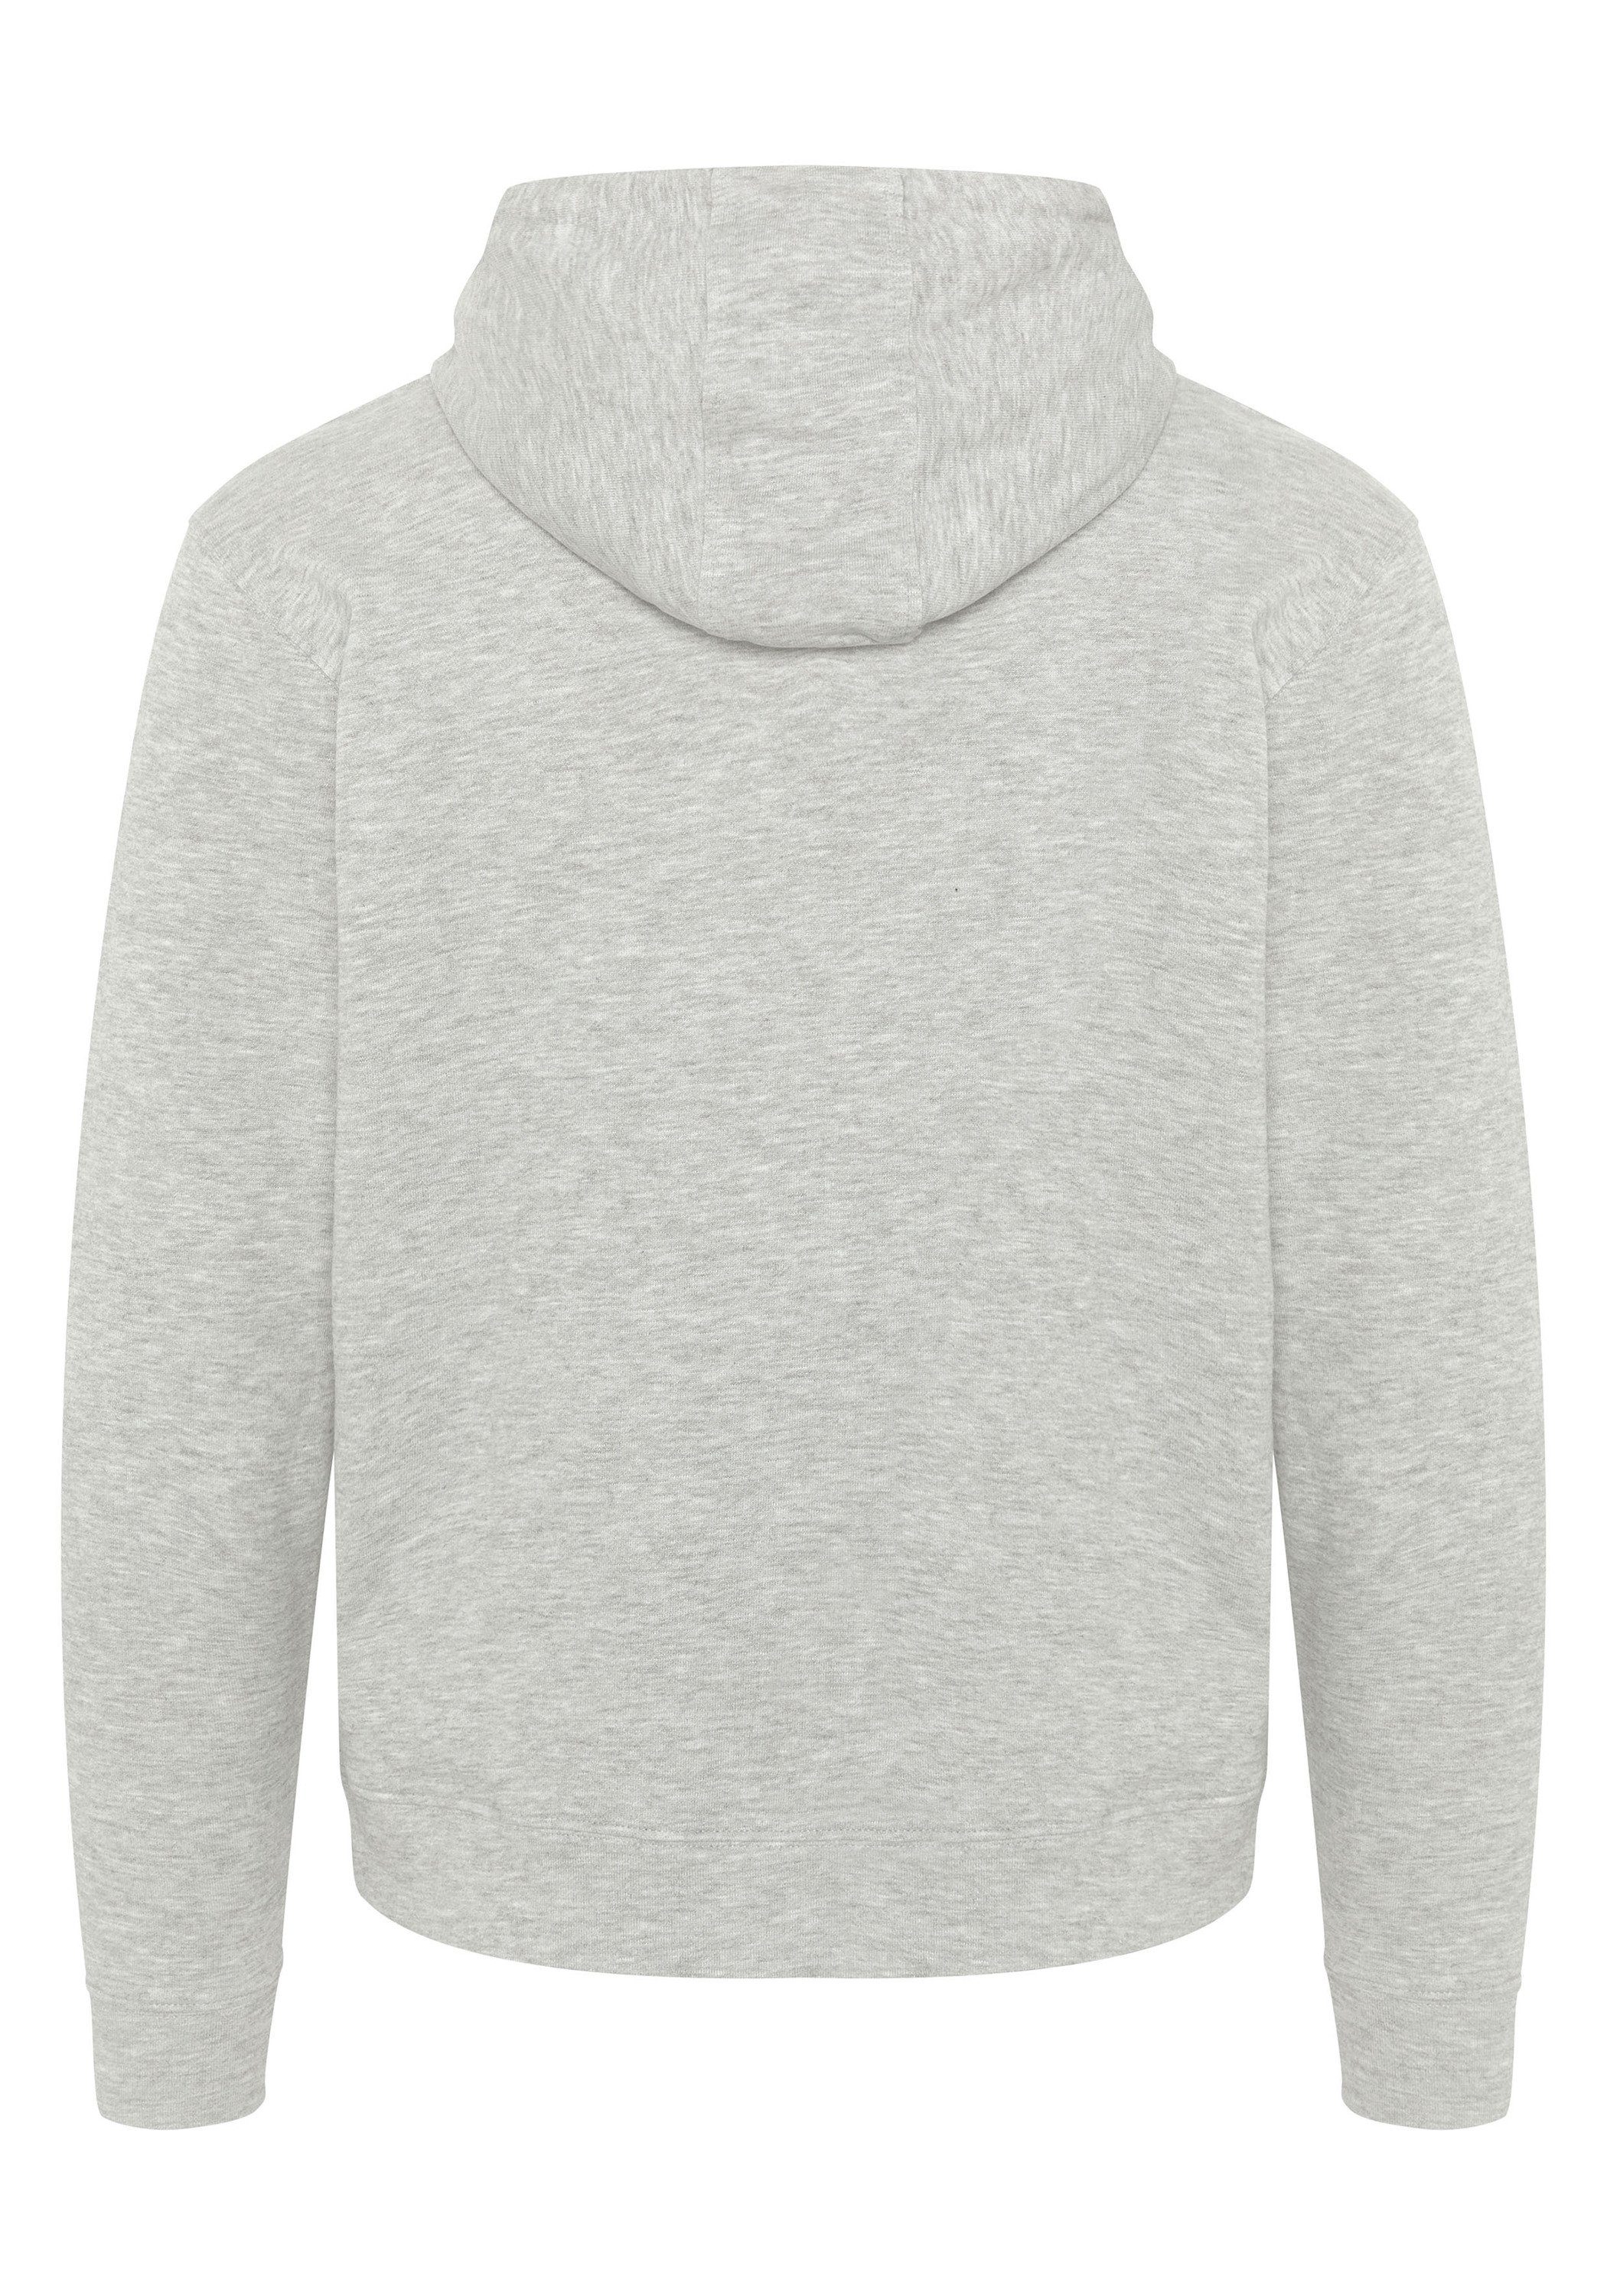 Detto Fatto Kapuzensweatshirt Basic-Stil Light im 72 Grey